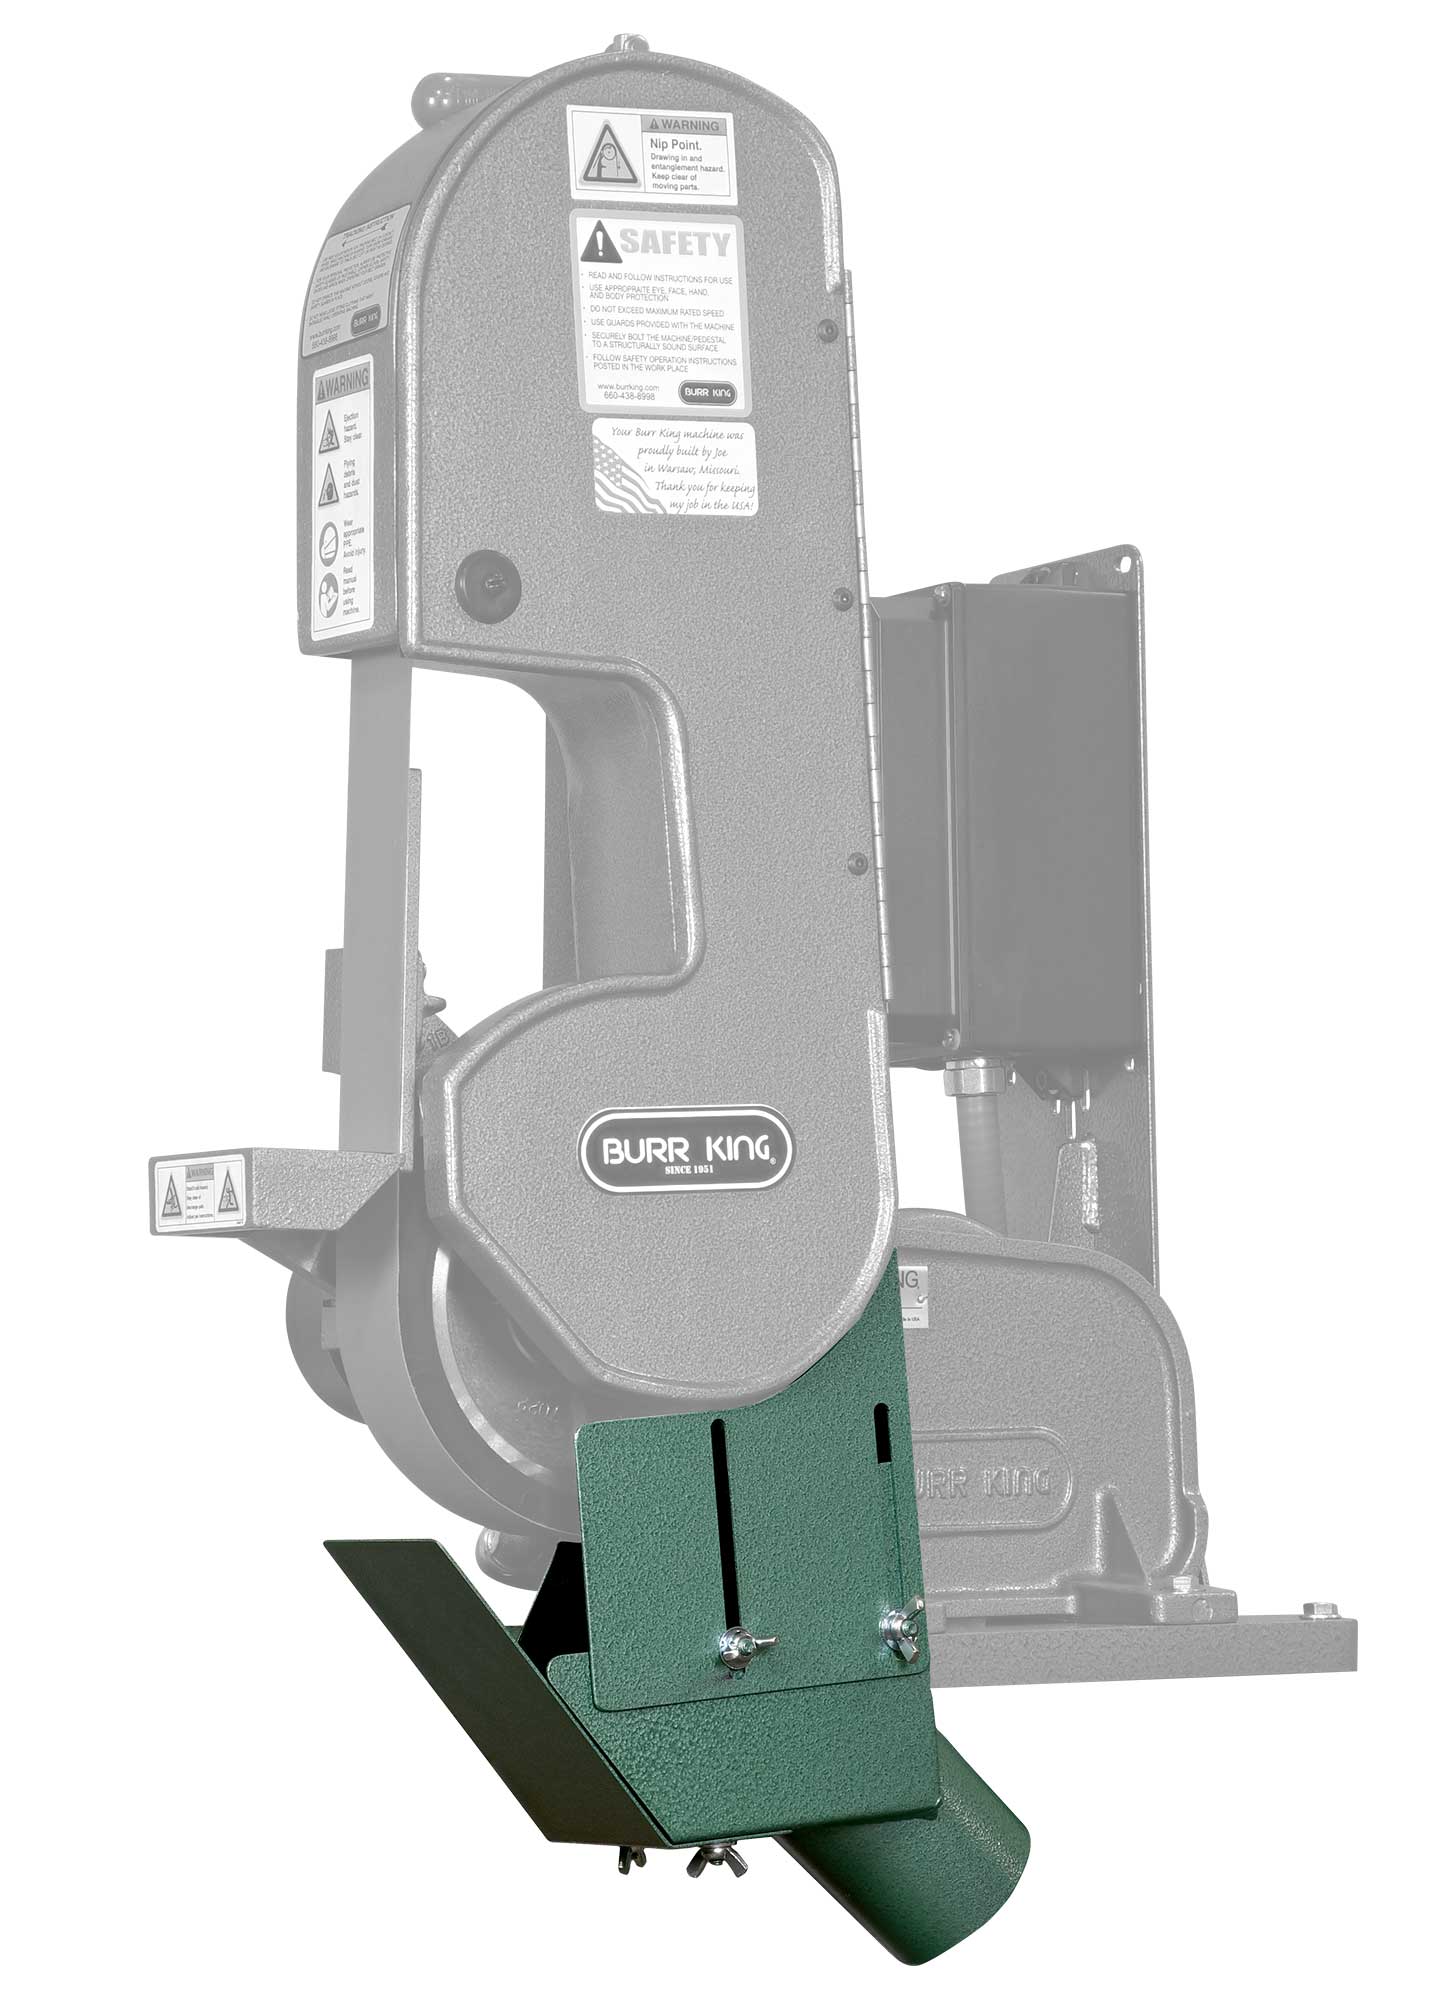 DS400-1 dust scoop for Burr King Model X400 belt grinder. Shown on 24821 variable speed X400